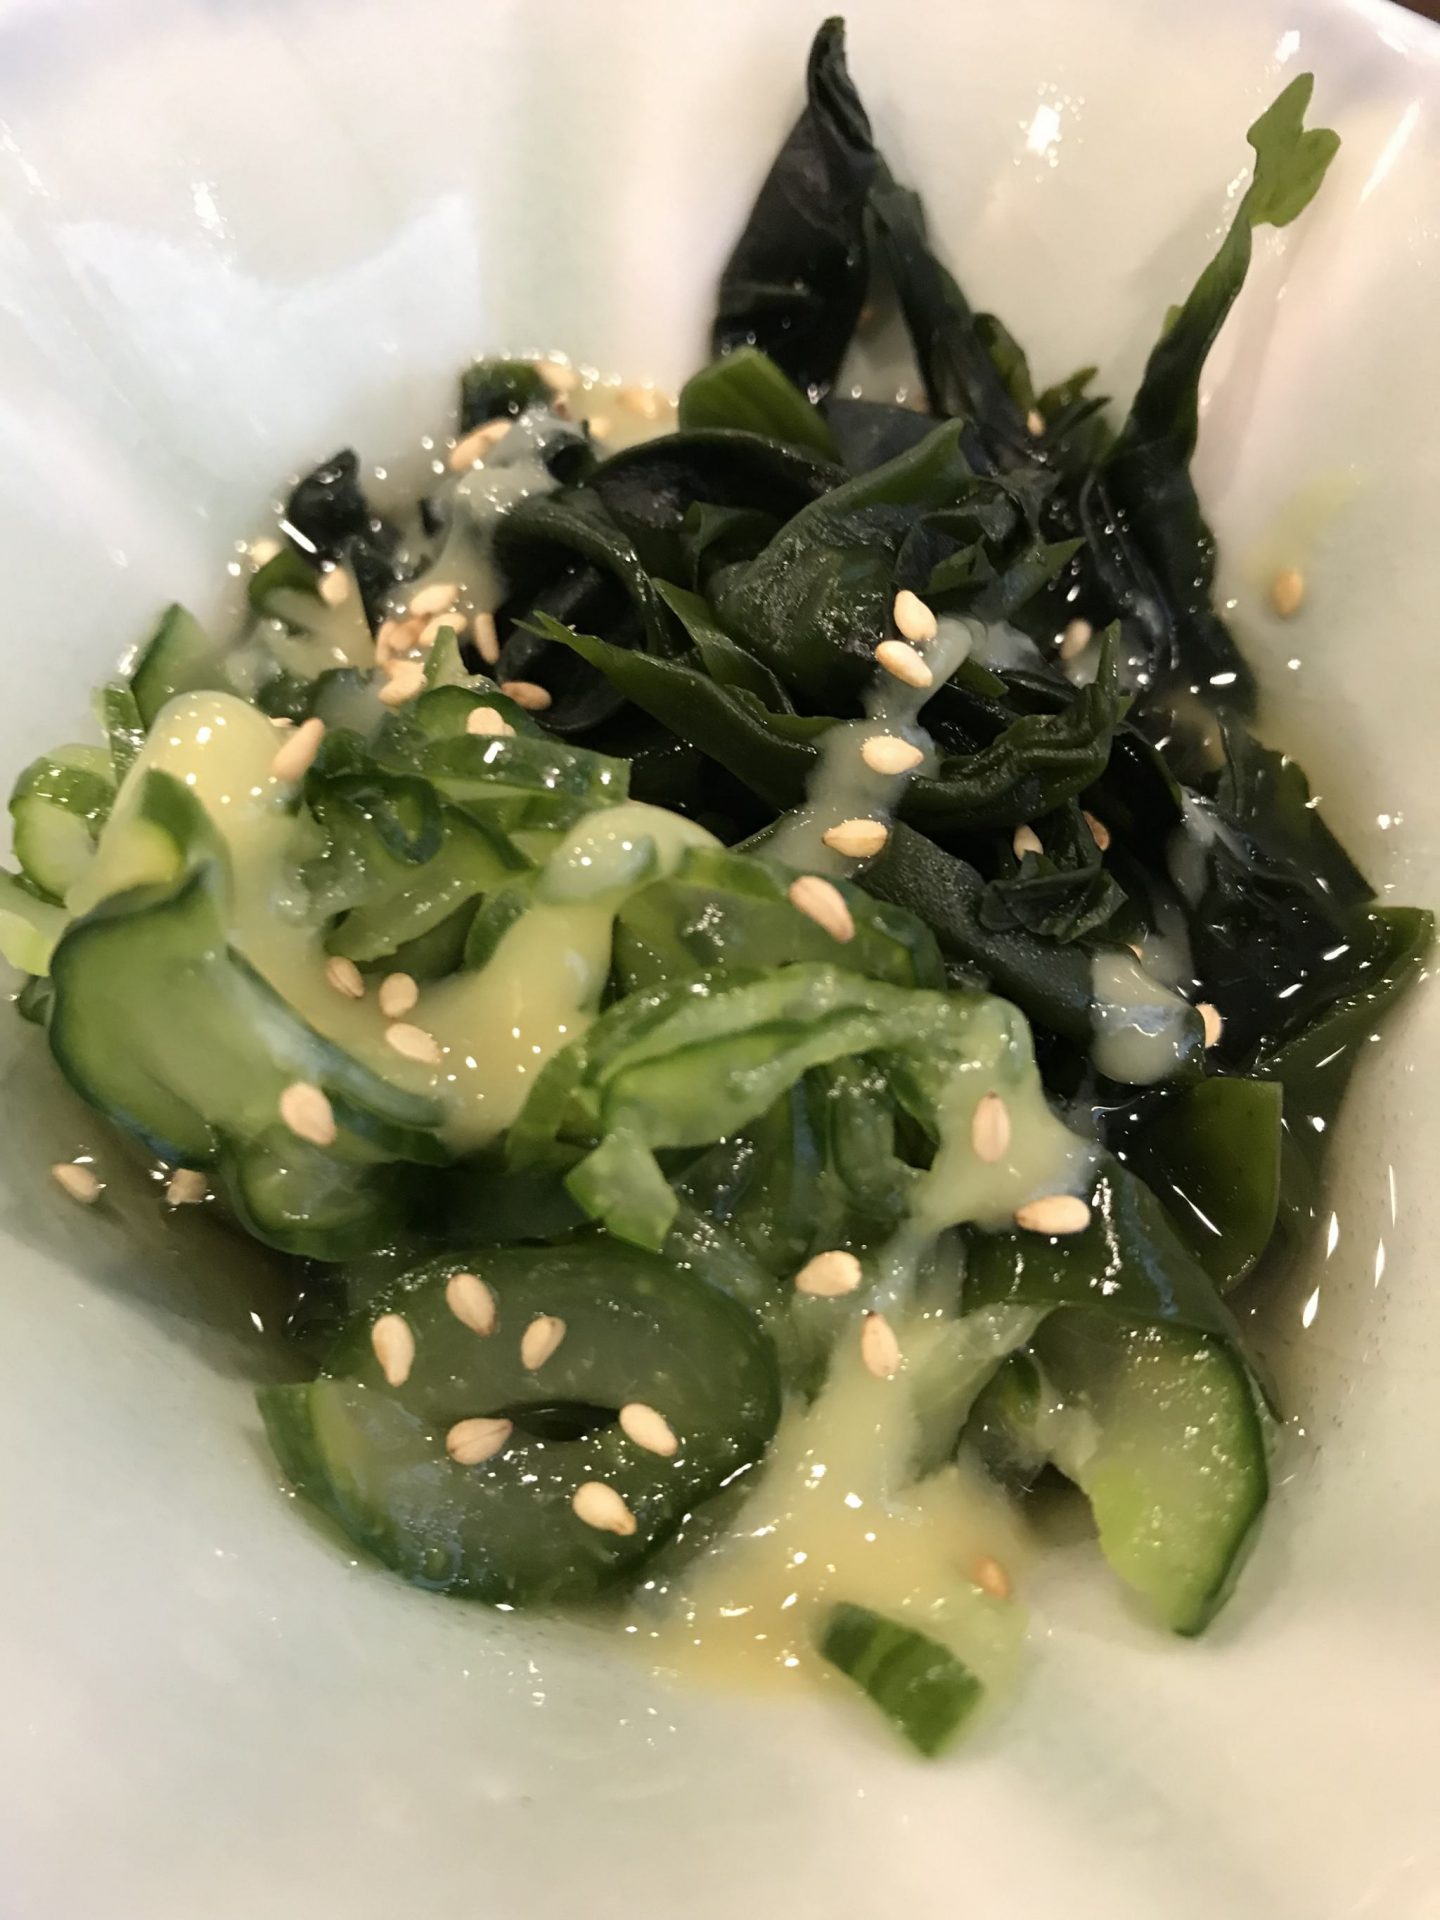 Wakame Alge Gurke Salat Restaurant Yabase Düsseldorf Erfahrung Bewertung Kritik Foodblog Sternestulle